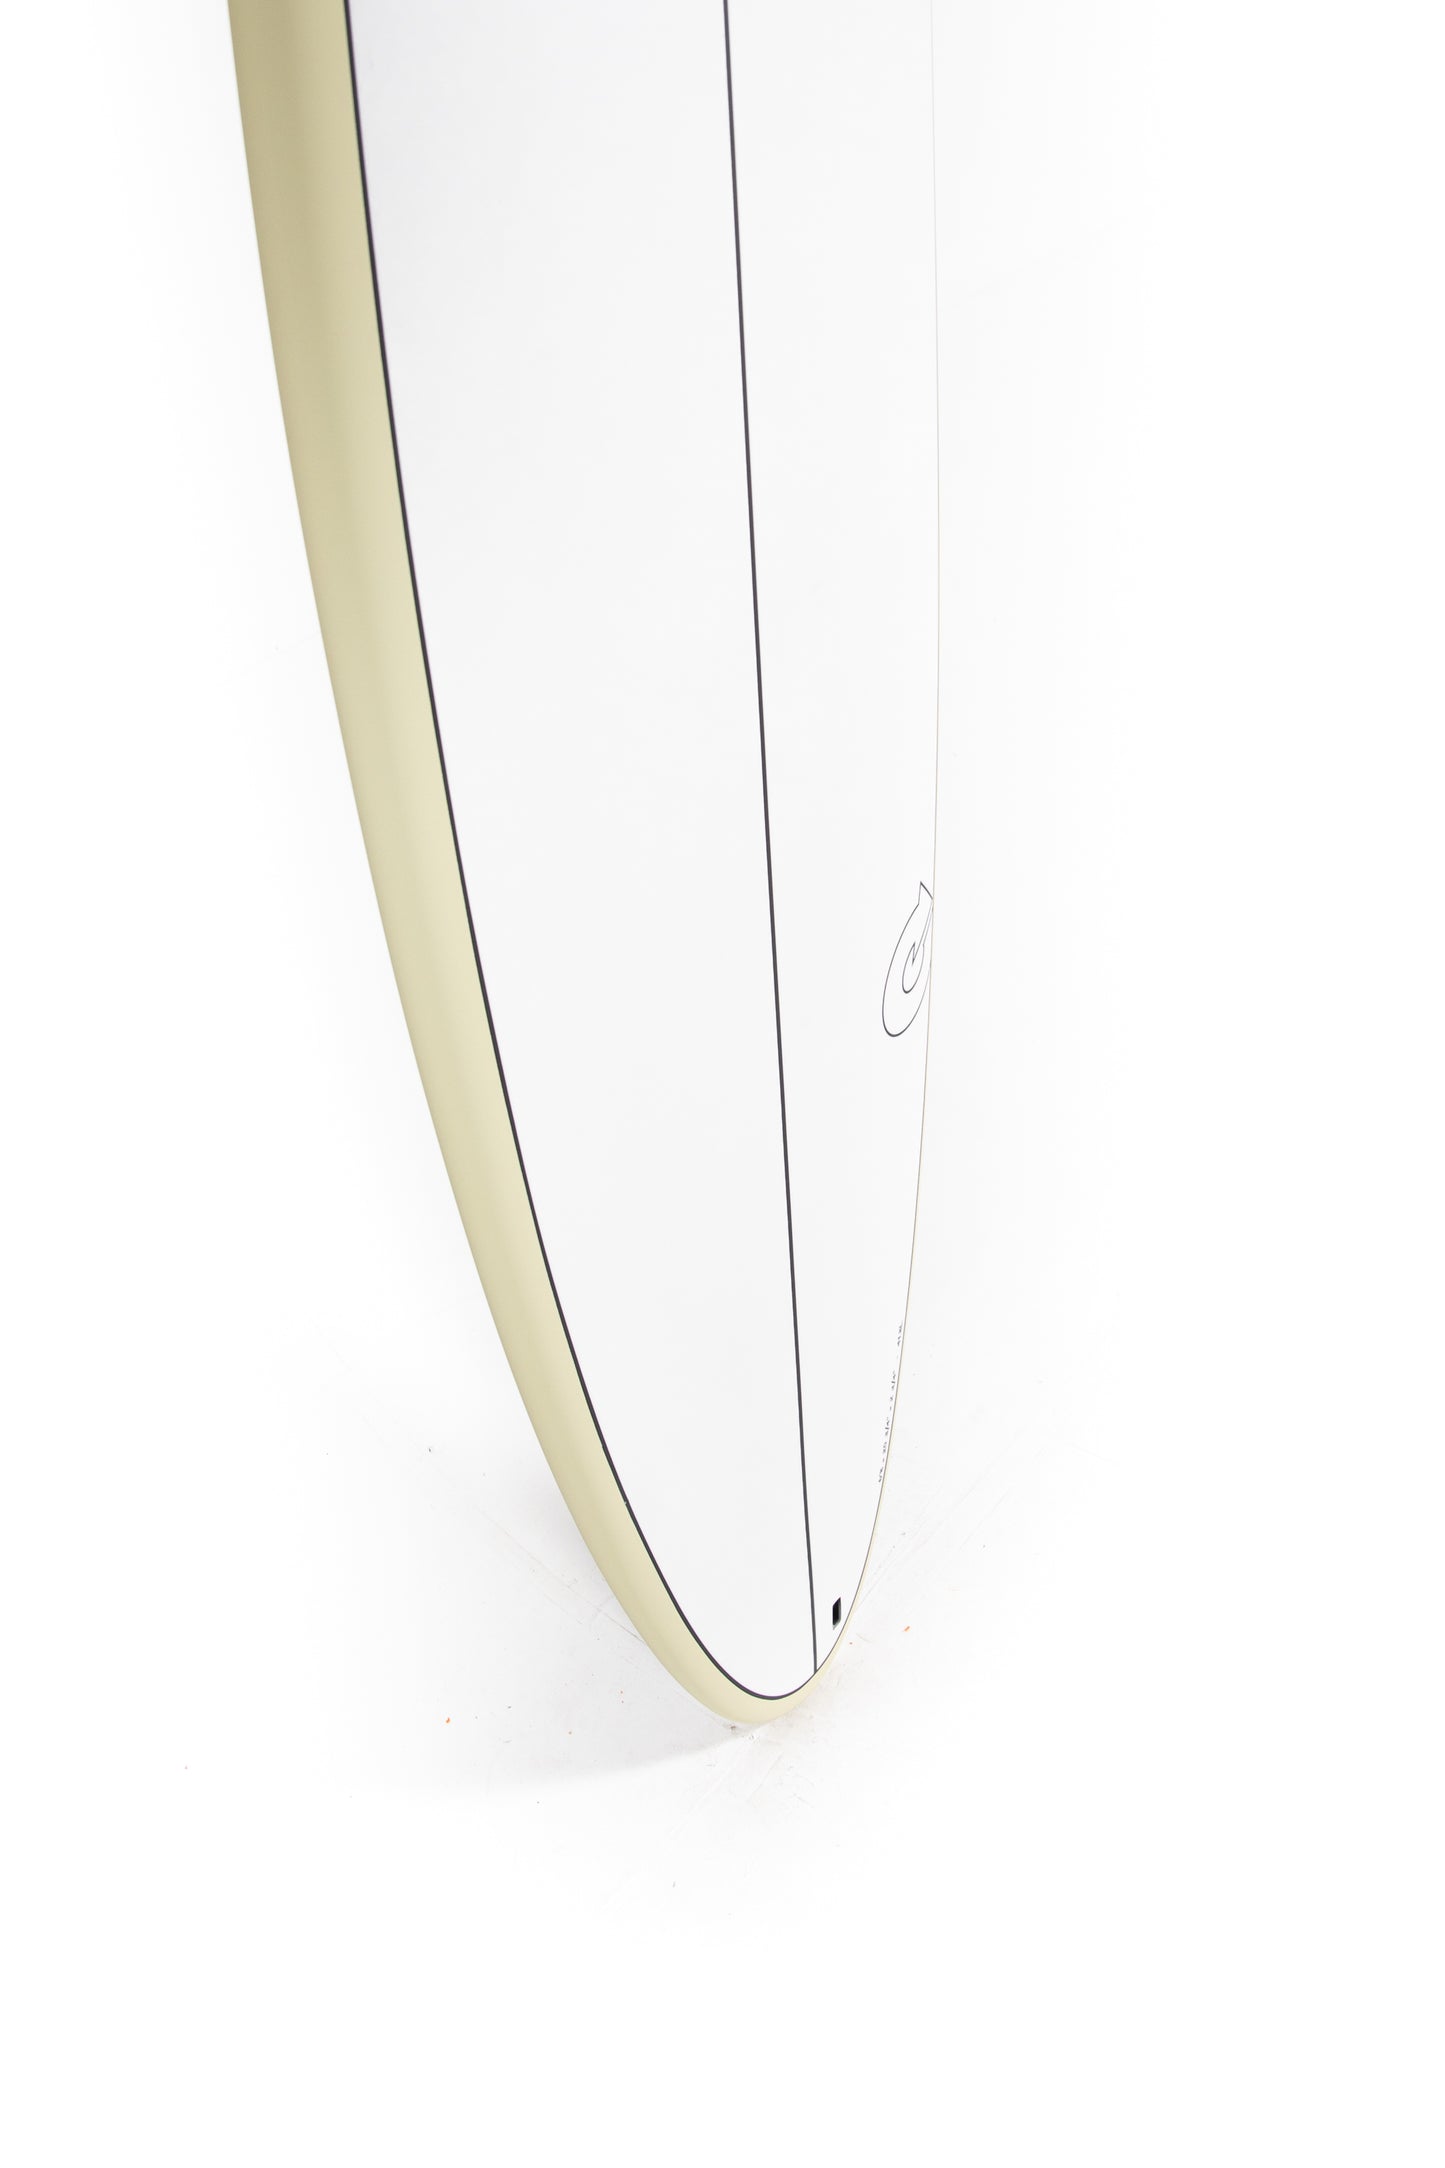 
                  
                    Pukas-Surf-Shop-Torq-Surfboards-M23-6_8_-beige
                  
                